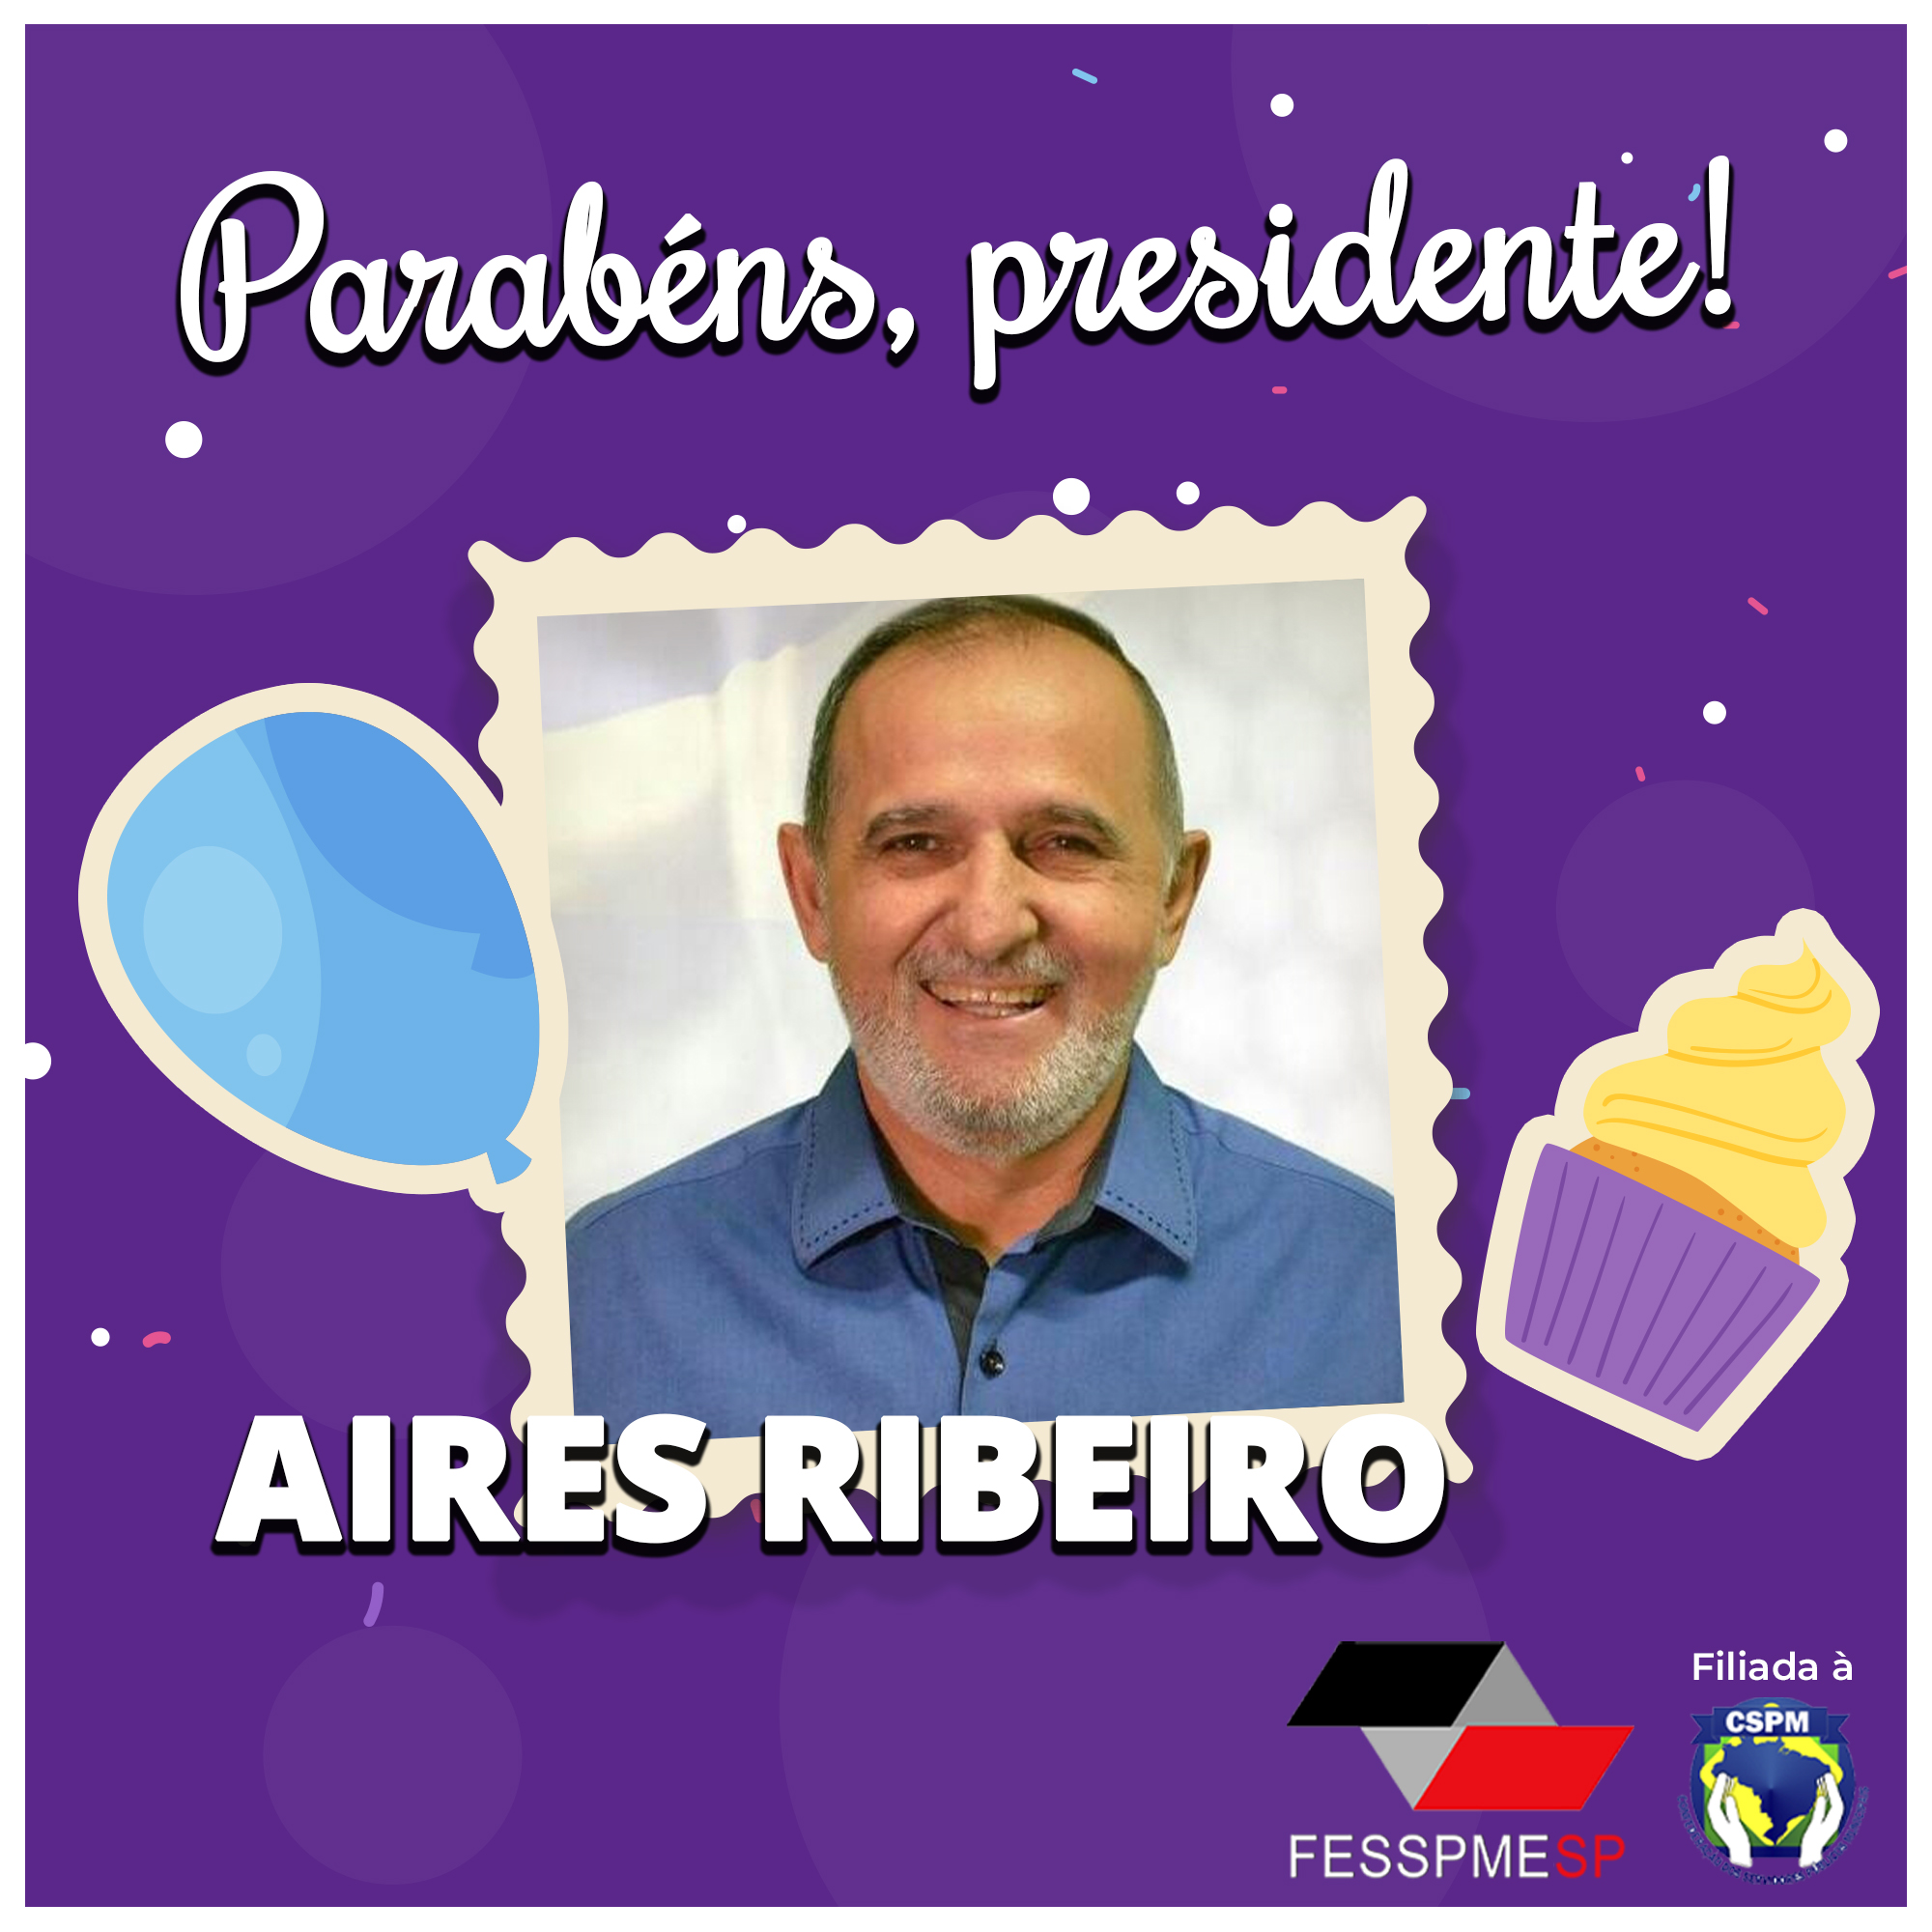 Feliz aniversário, presidente Aires Ribeiro!